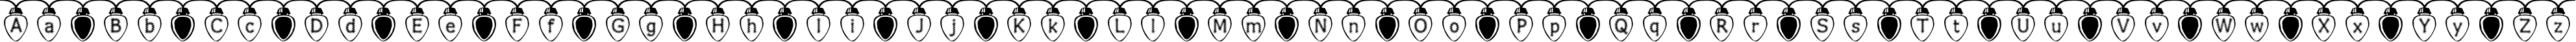 Пример написания английского алфавита шрифтом Fuzzy Xmas Lights